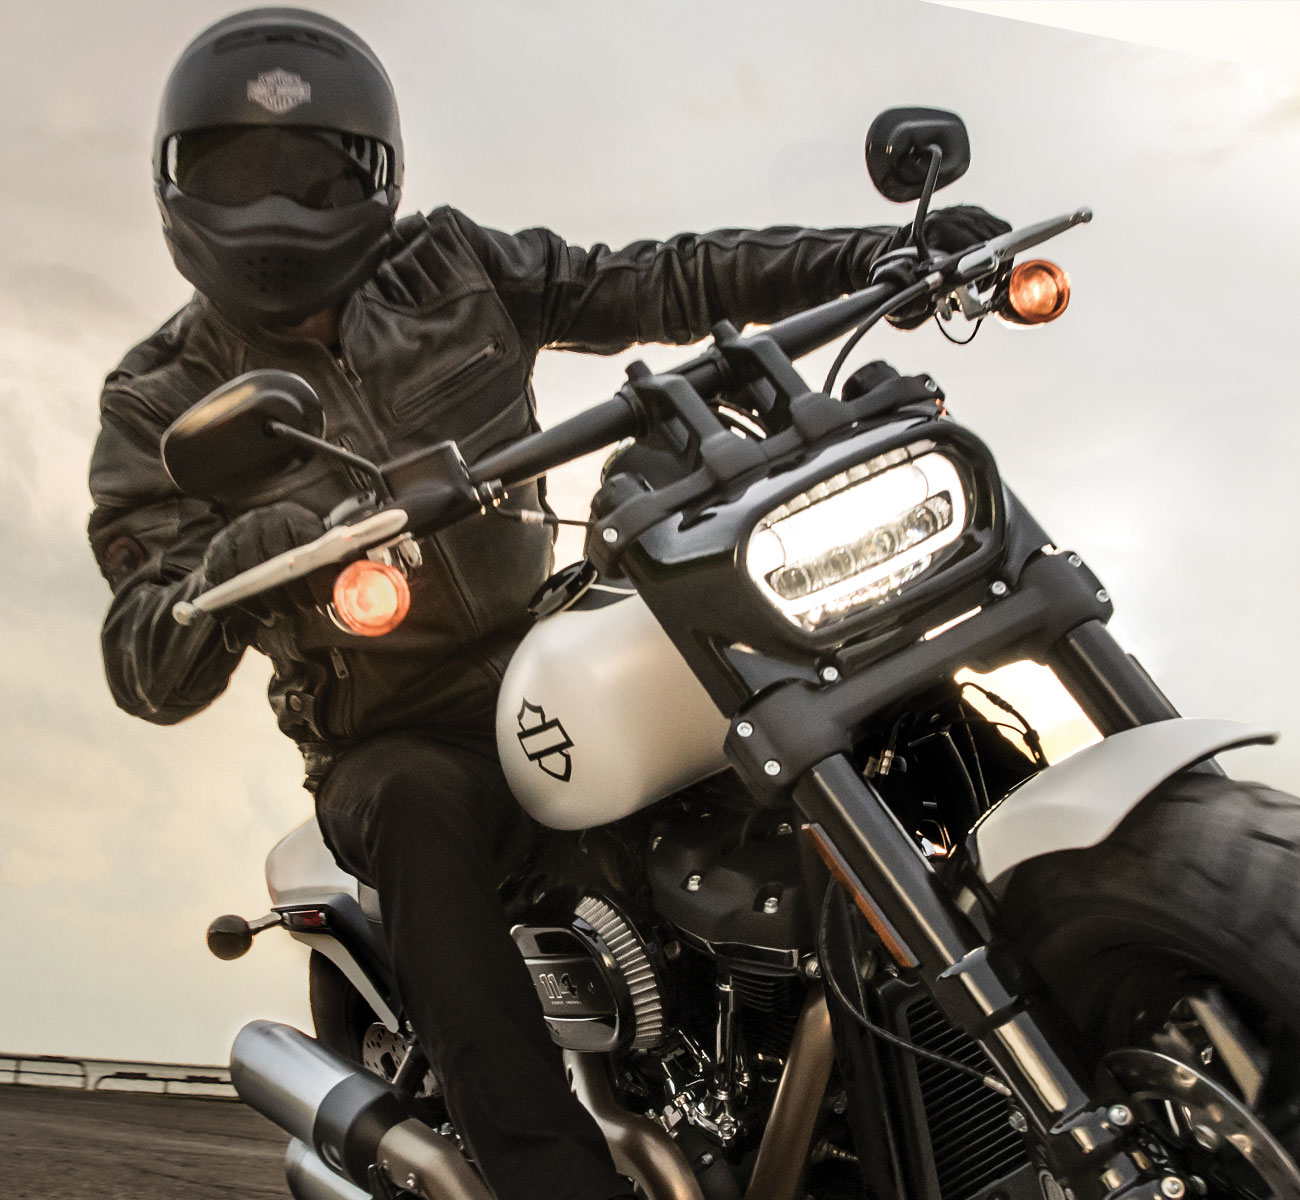 Harley-Davidson Offers